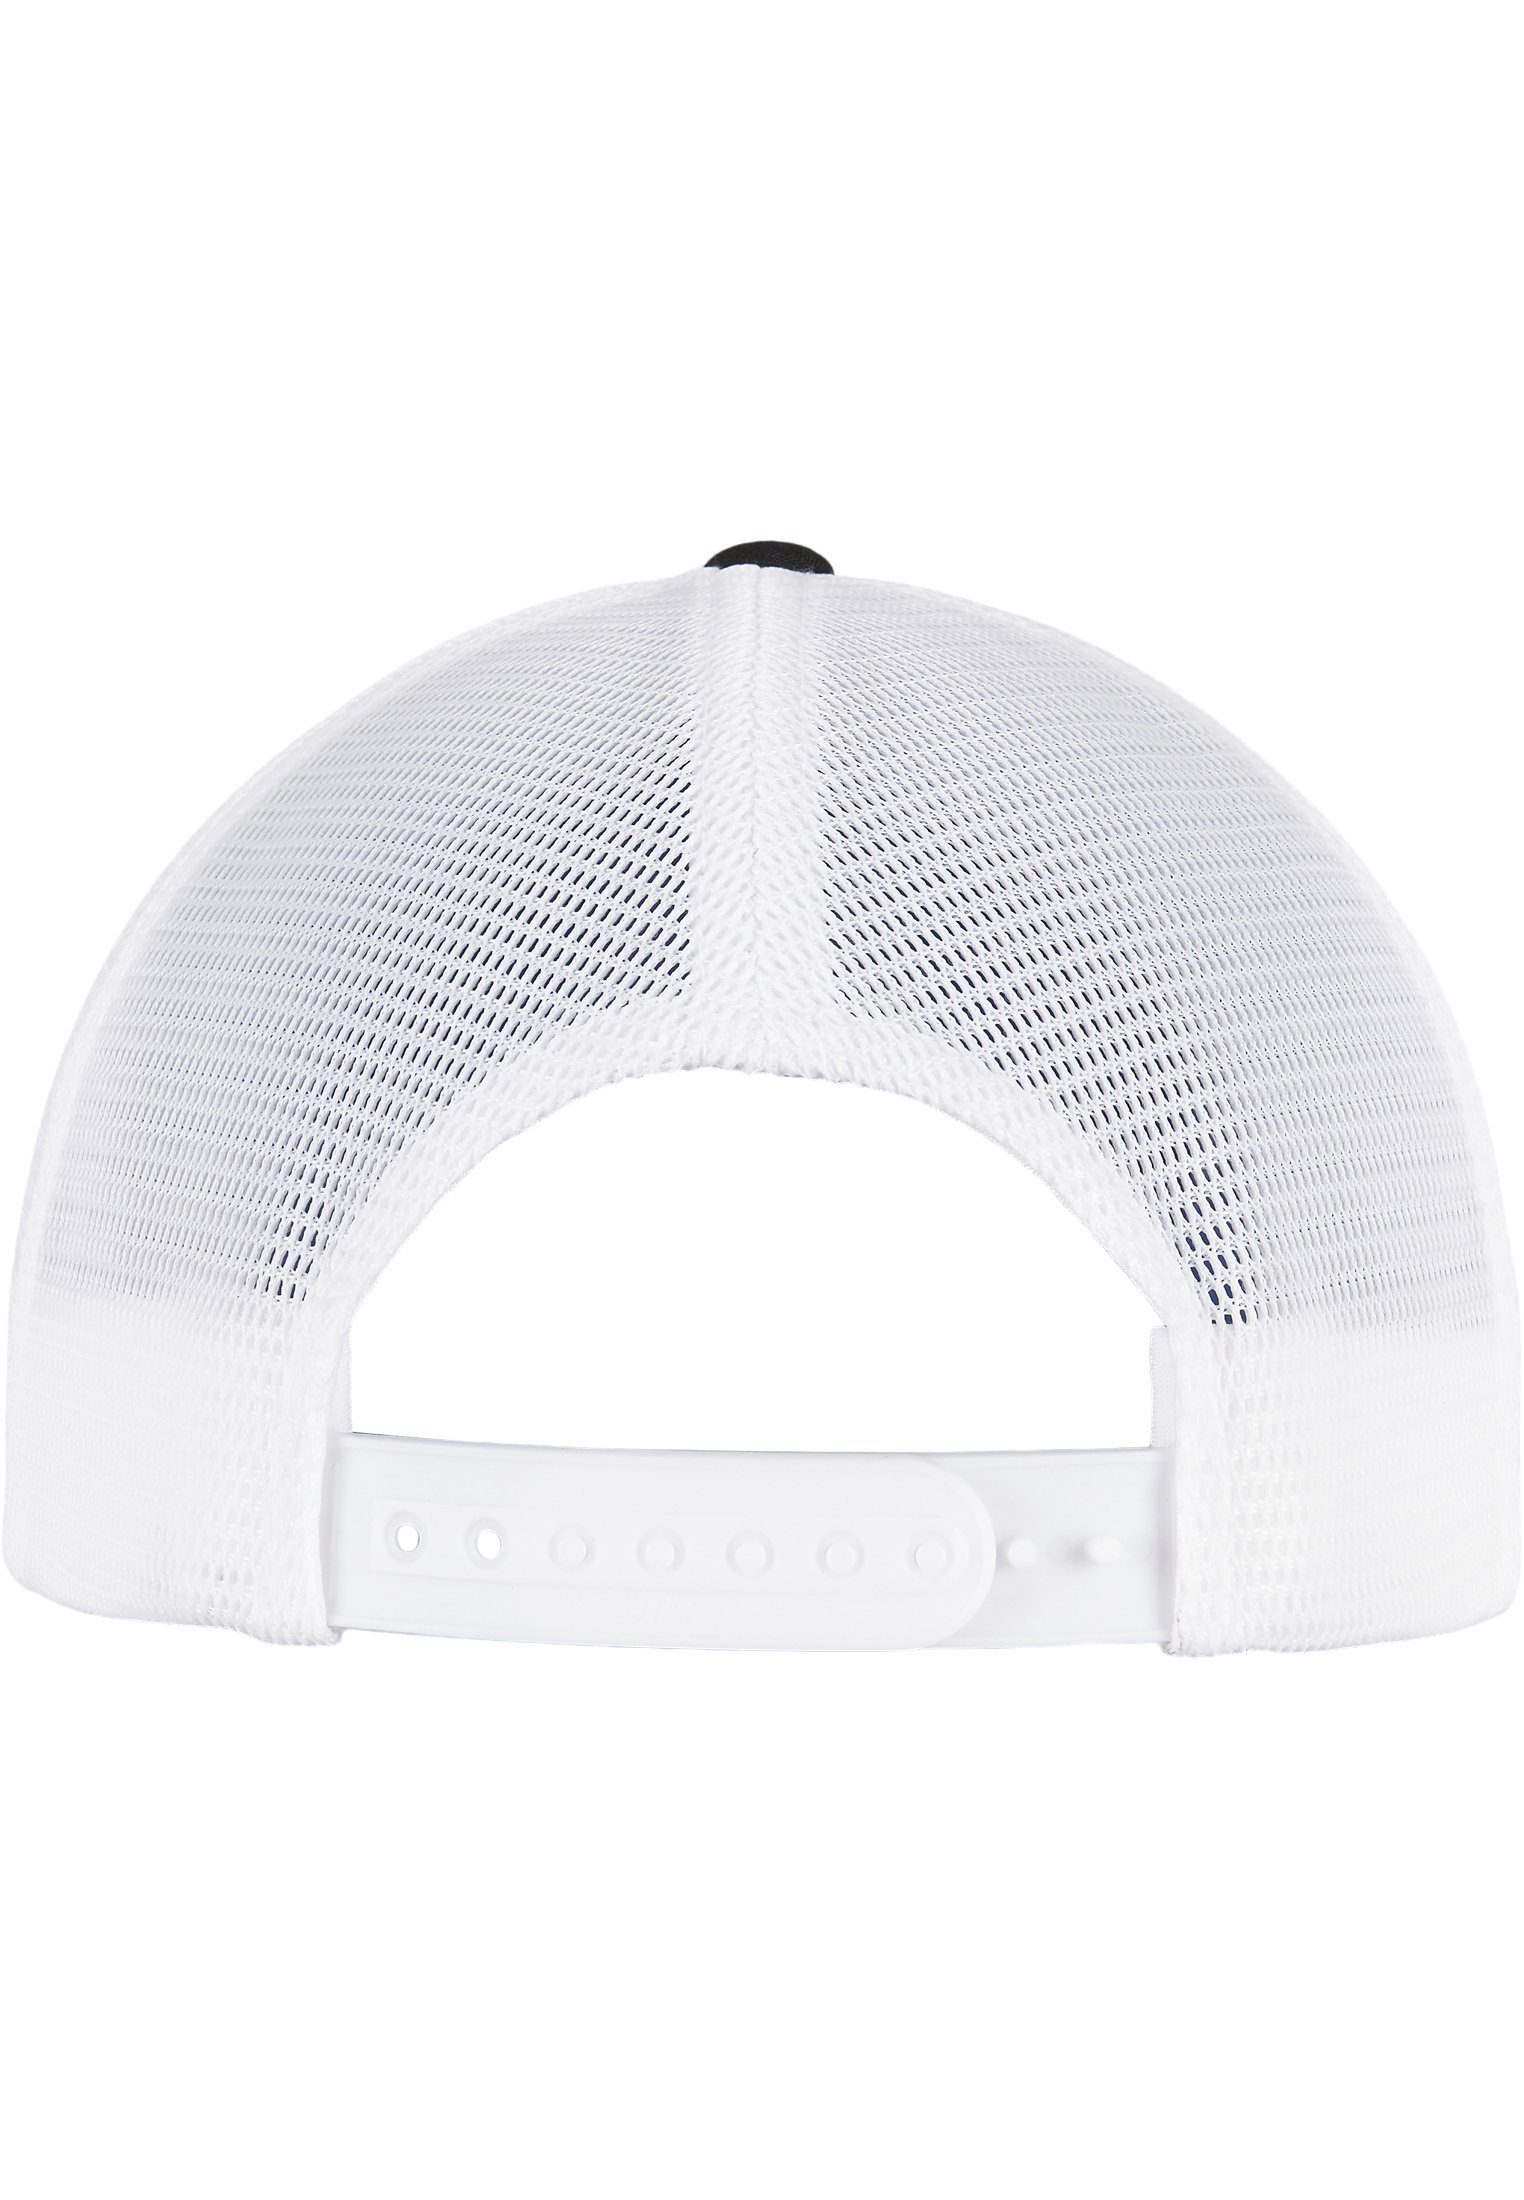 Flexfit Flex Cap Omnimesh black/white Accessoires 2-Tone 360° Cap